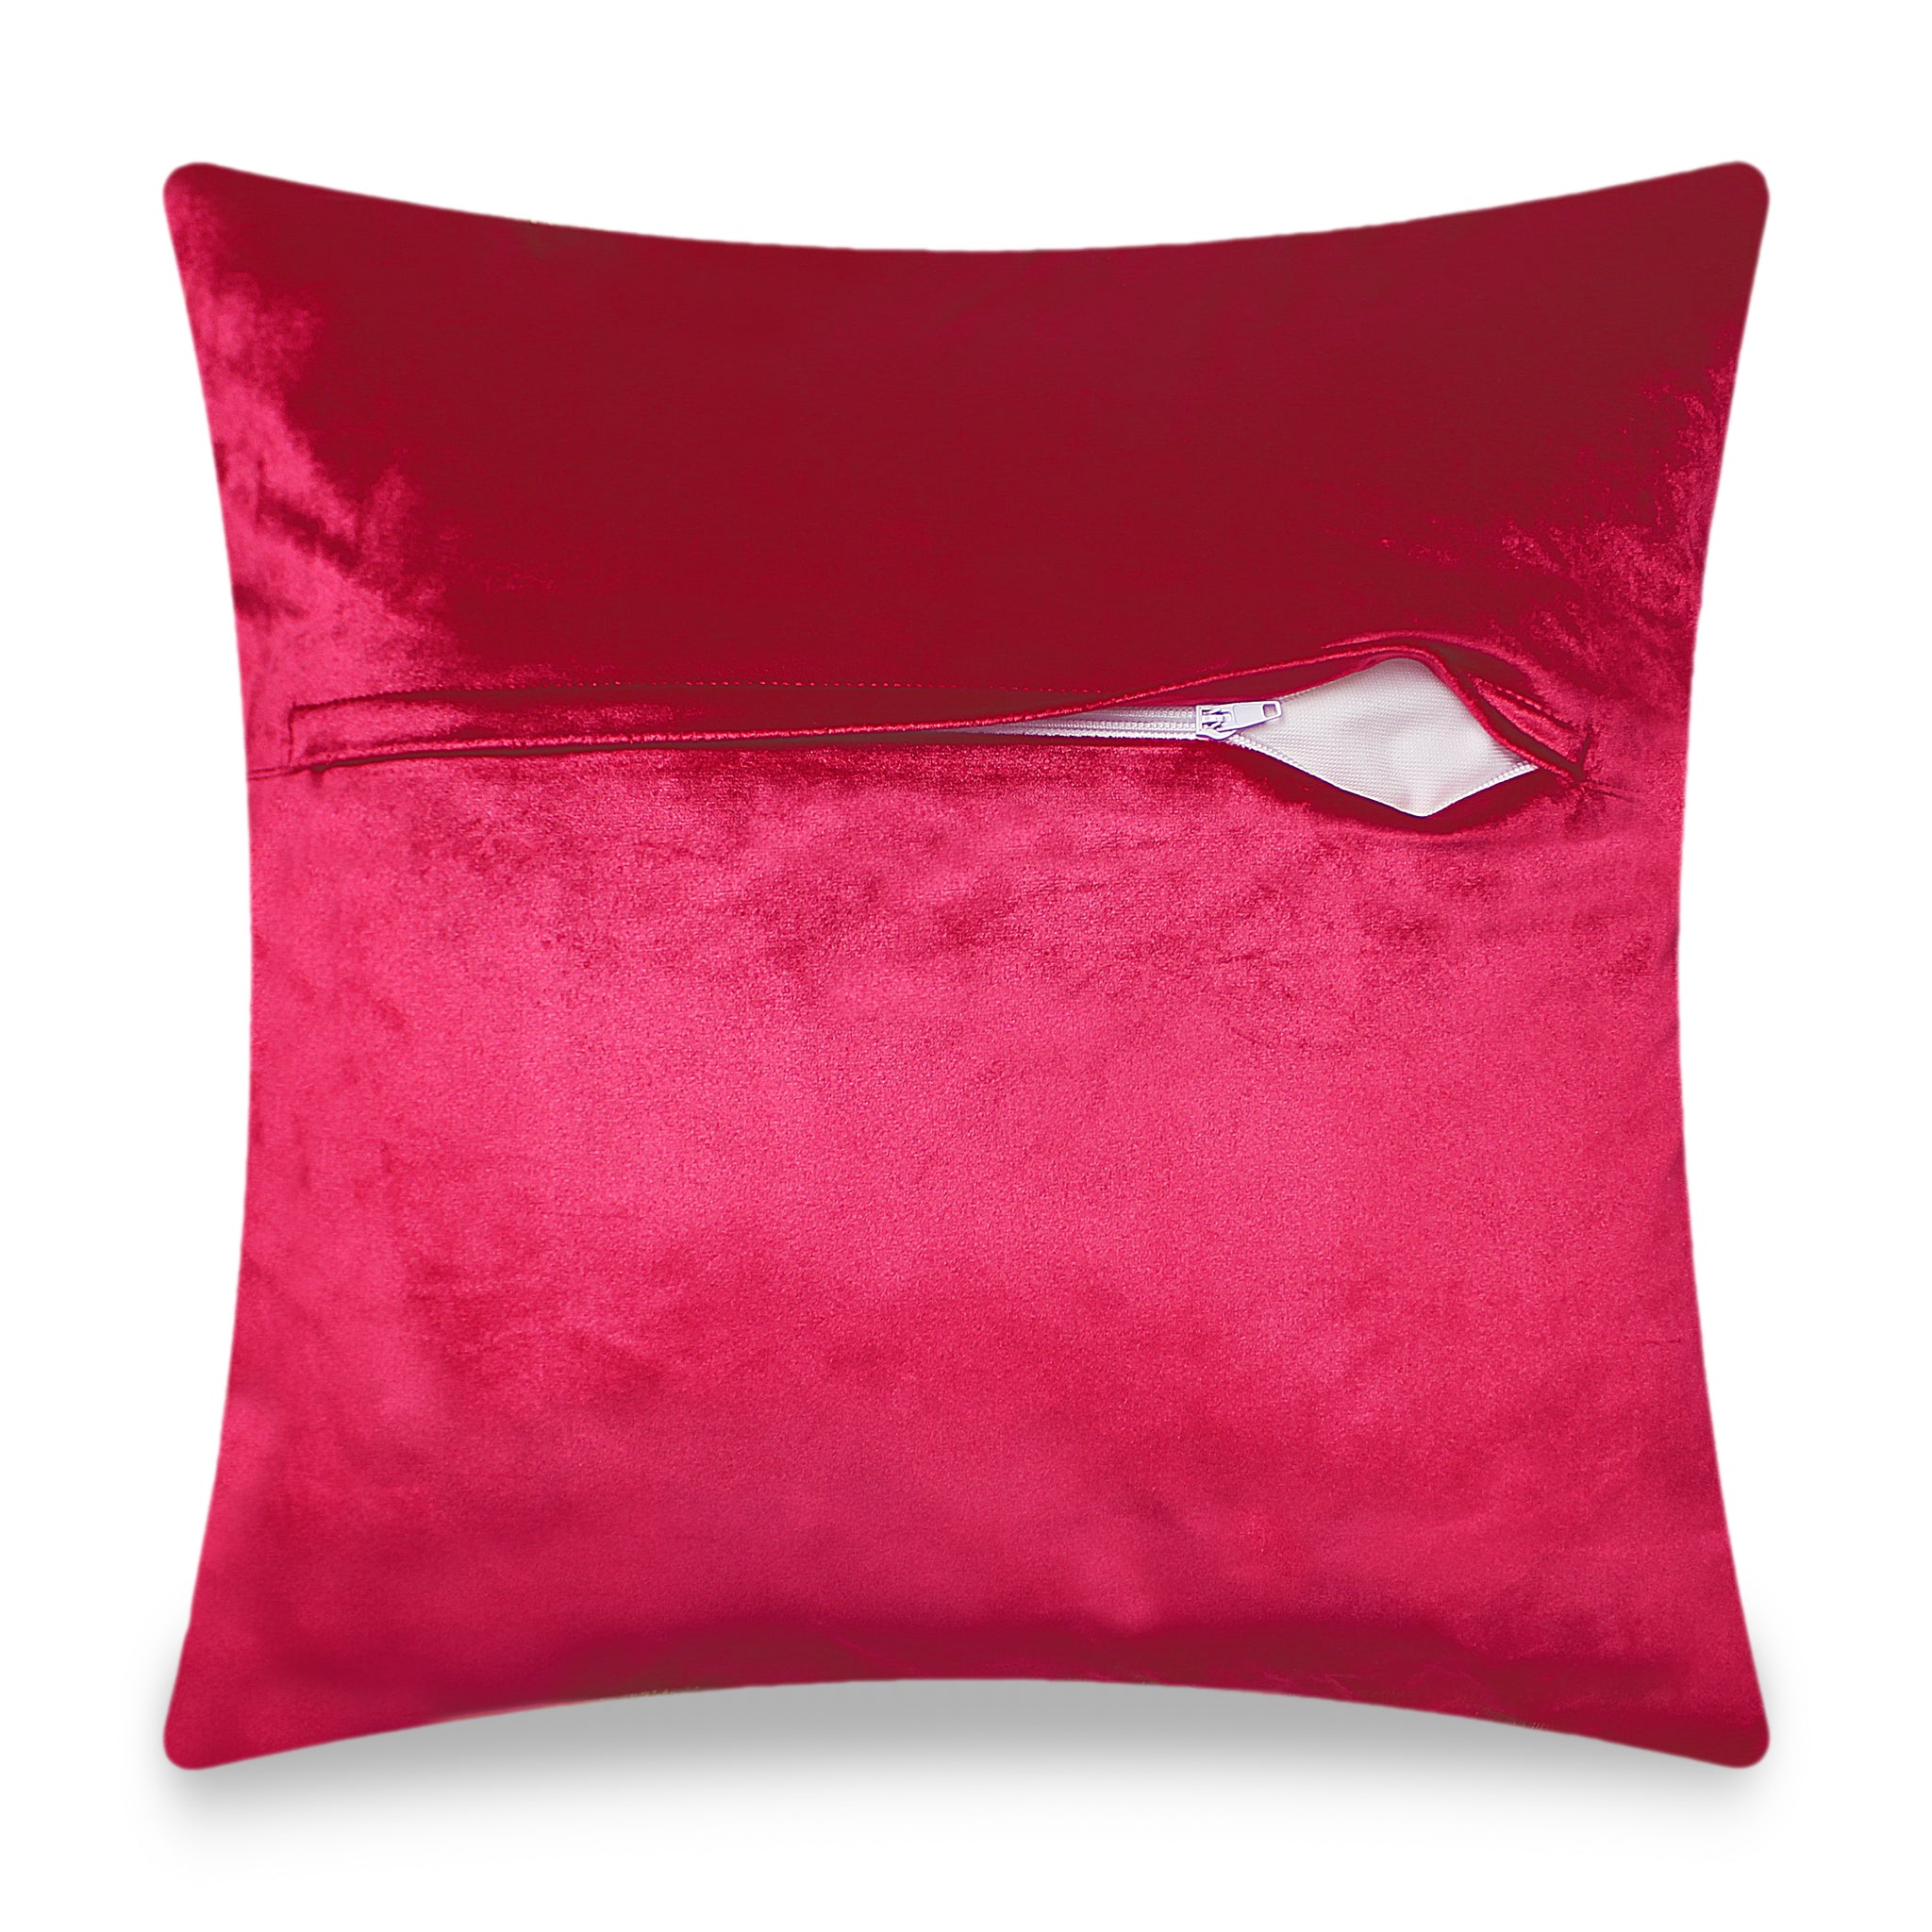 Red Velvet Cushion Cover Kitten on Flowers Decorative Pillowcase Modern Home Decor Throw Pillow for Sofa Chair 45x45 cm 